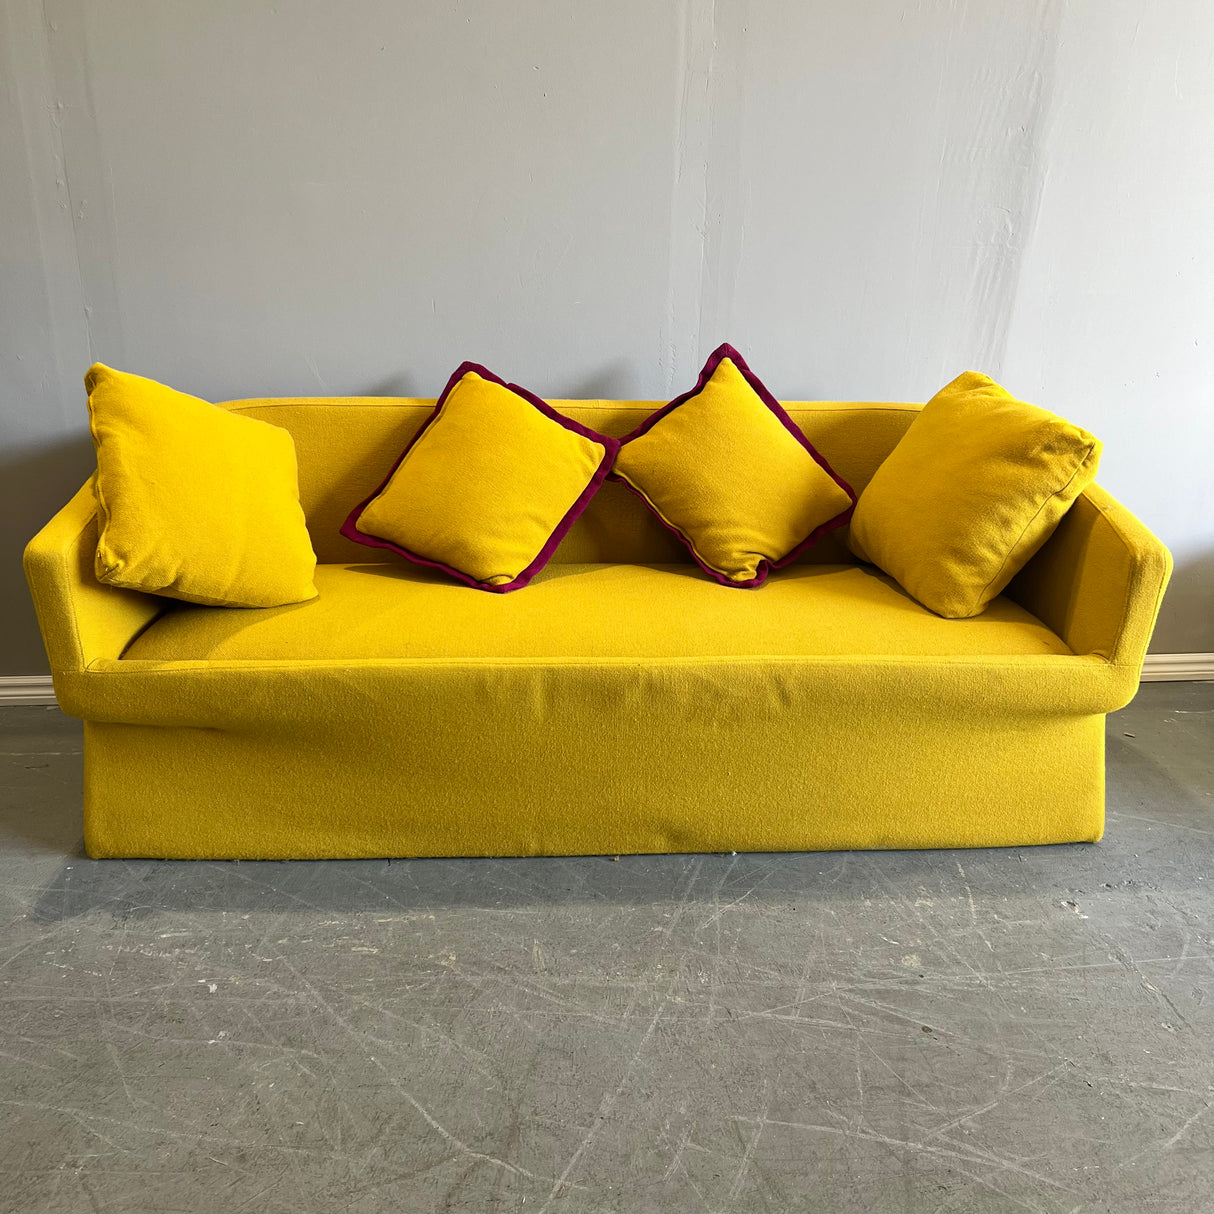 Designer Loveseat sofa from Vicarbe